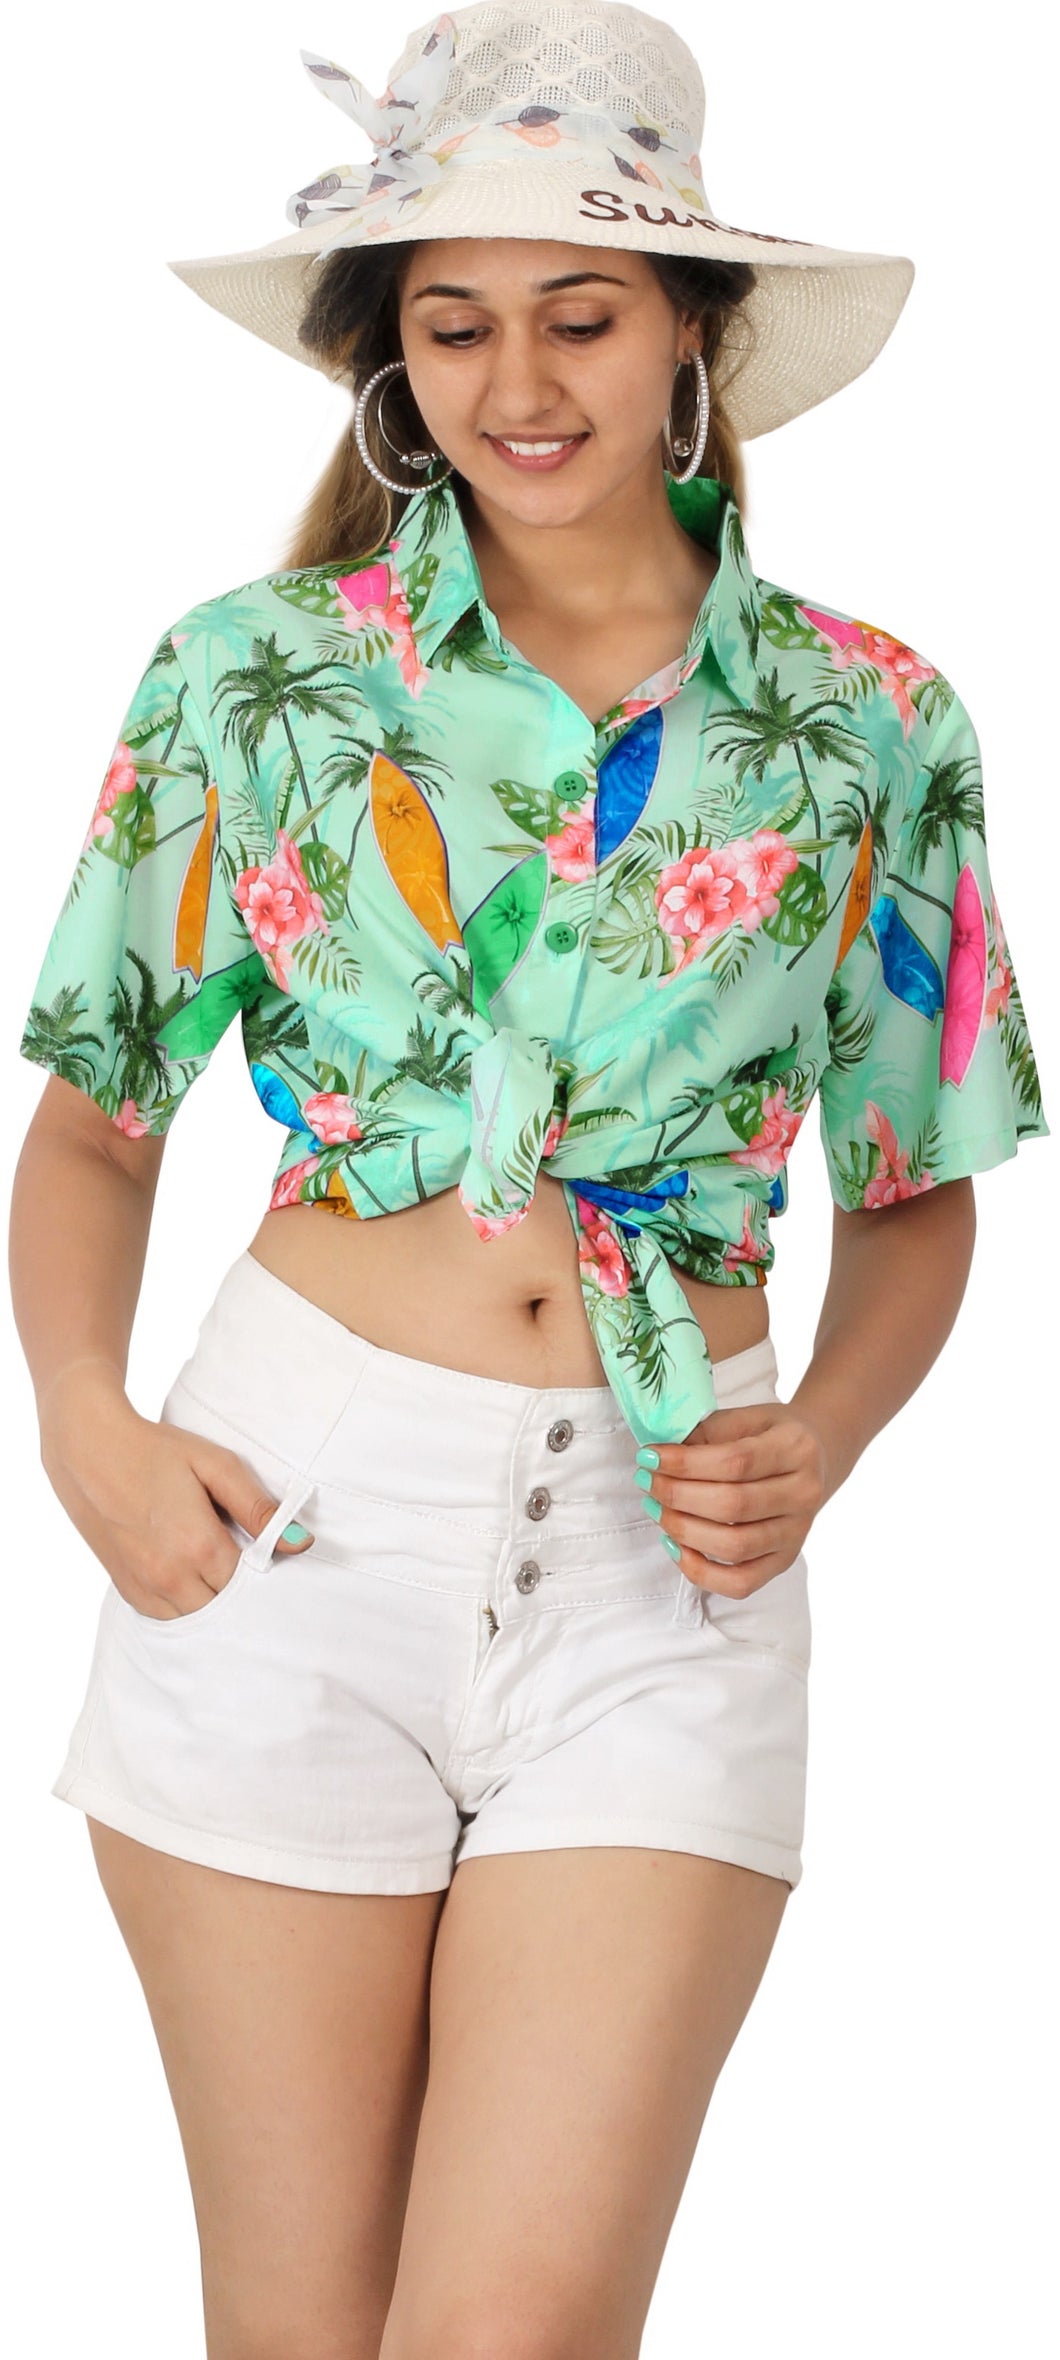 Sea Green Palm Tree and Floral Printed Hawaiian Shirts for Women